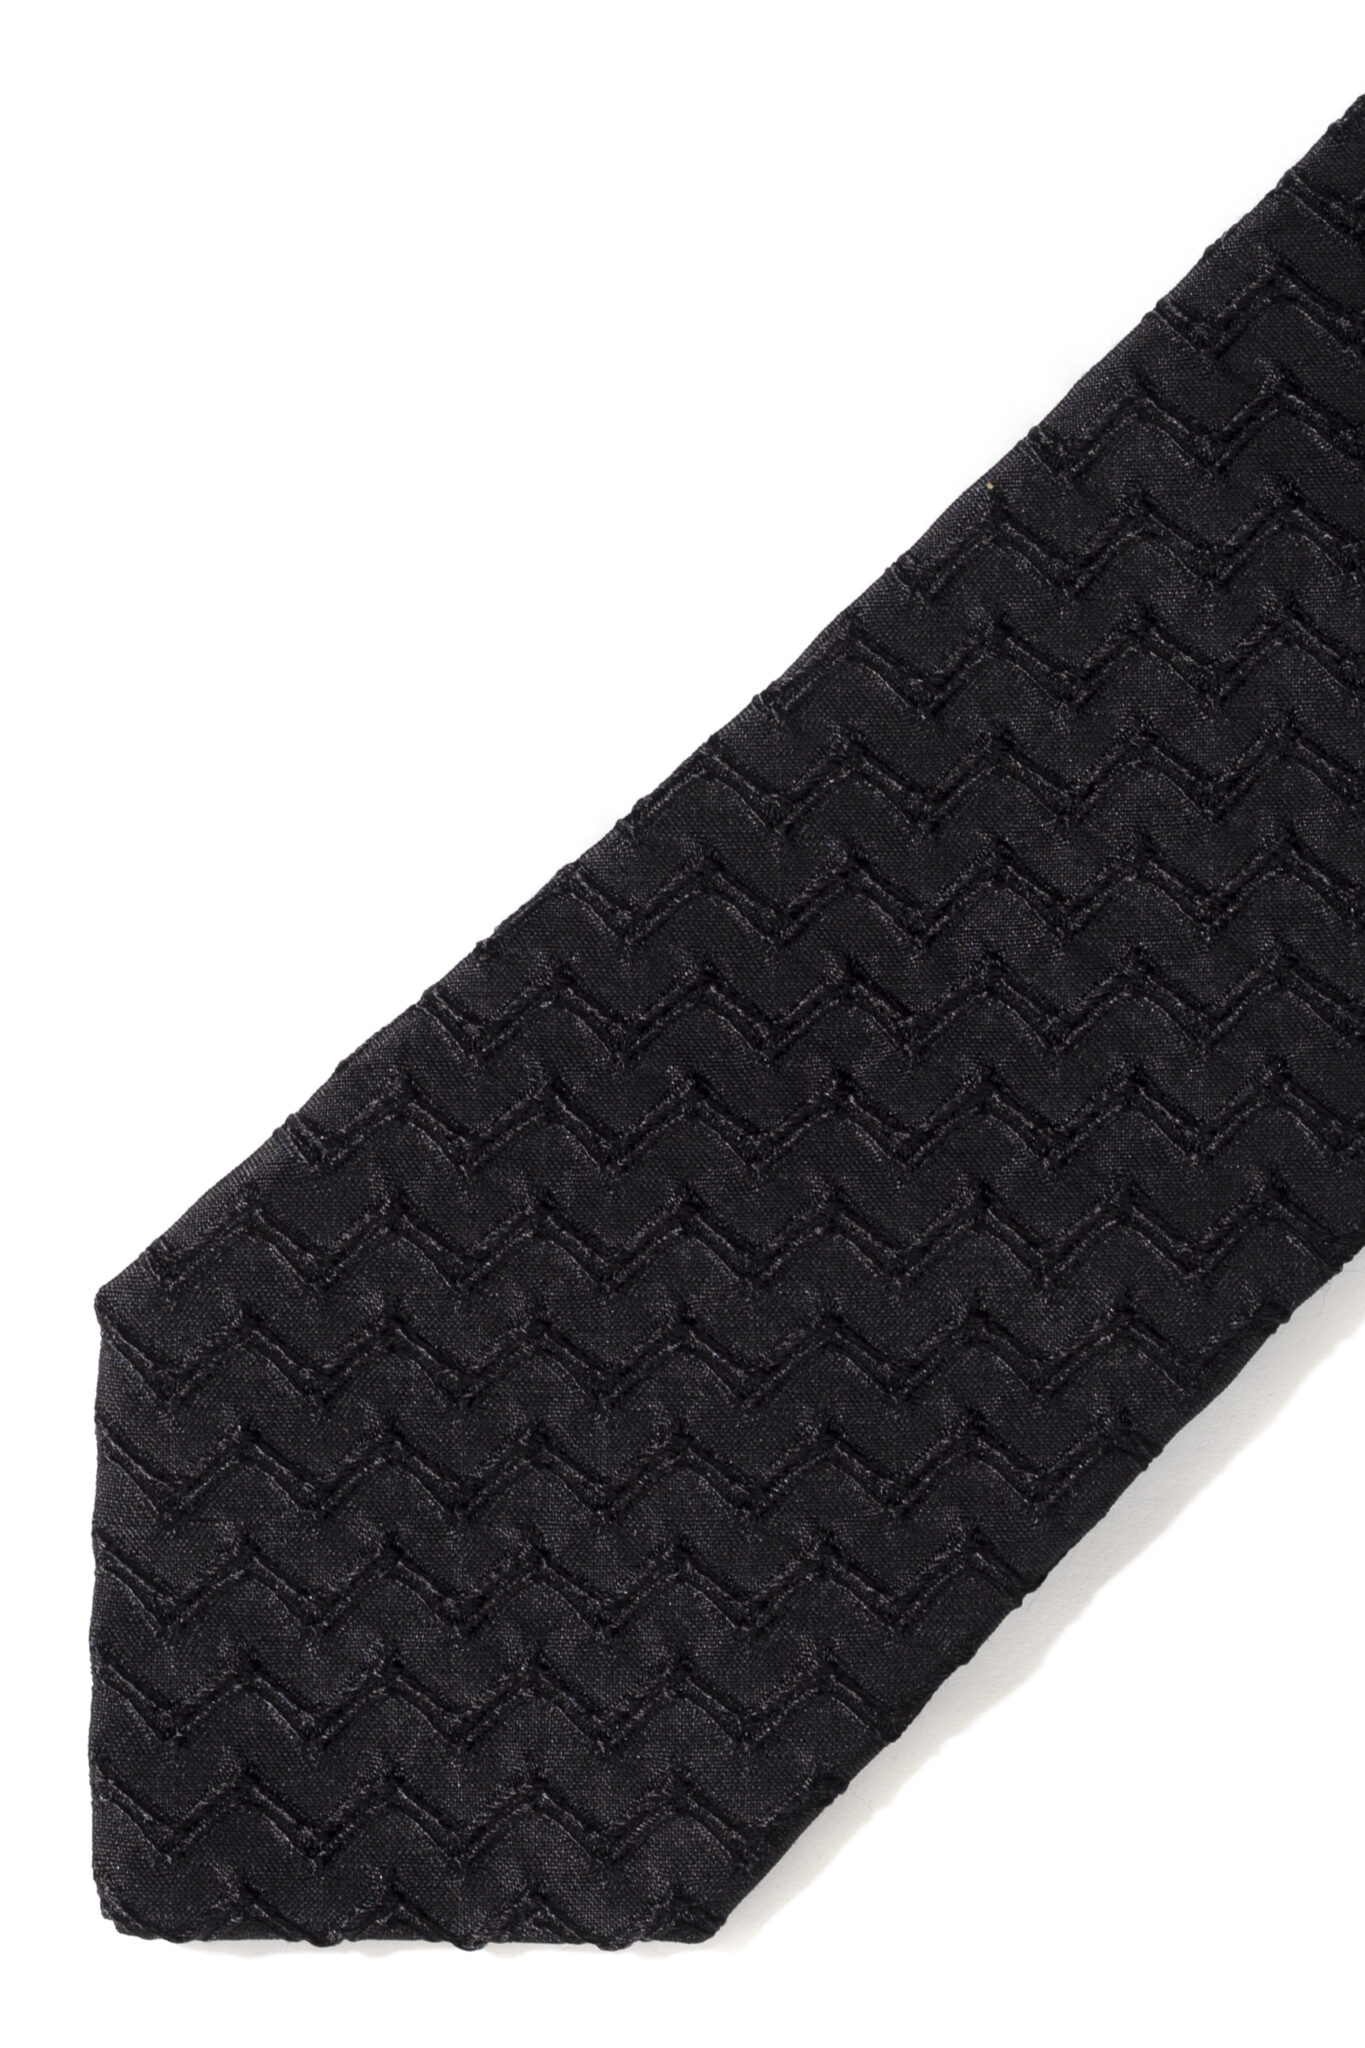 Palermo - Black structured tie | Café Costume